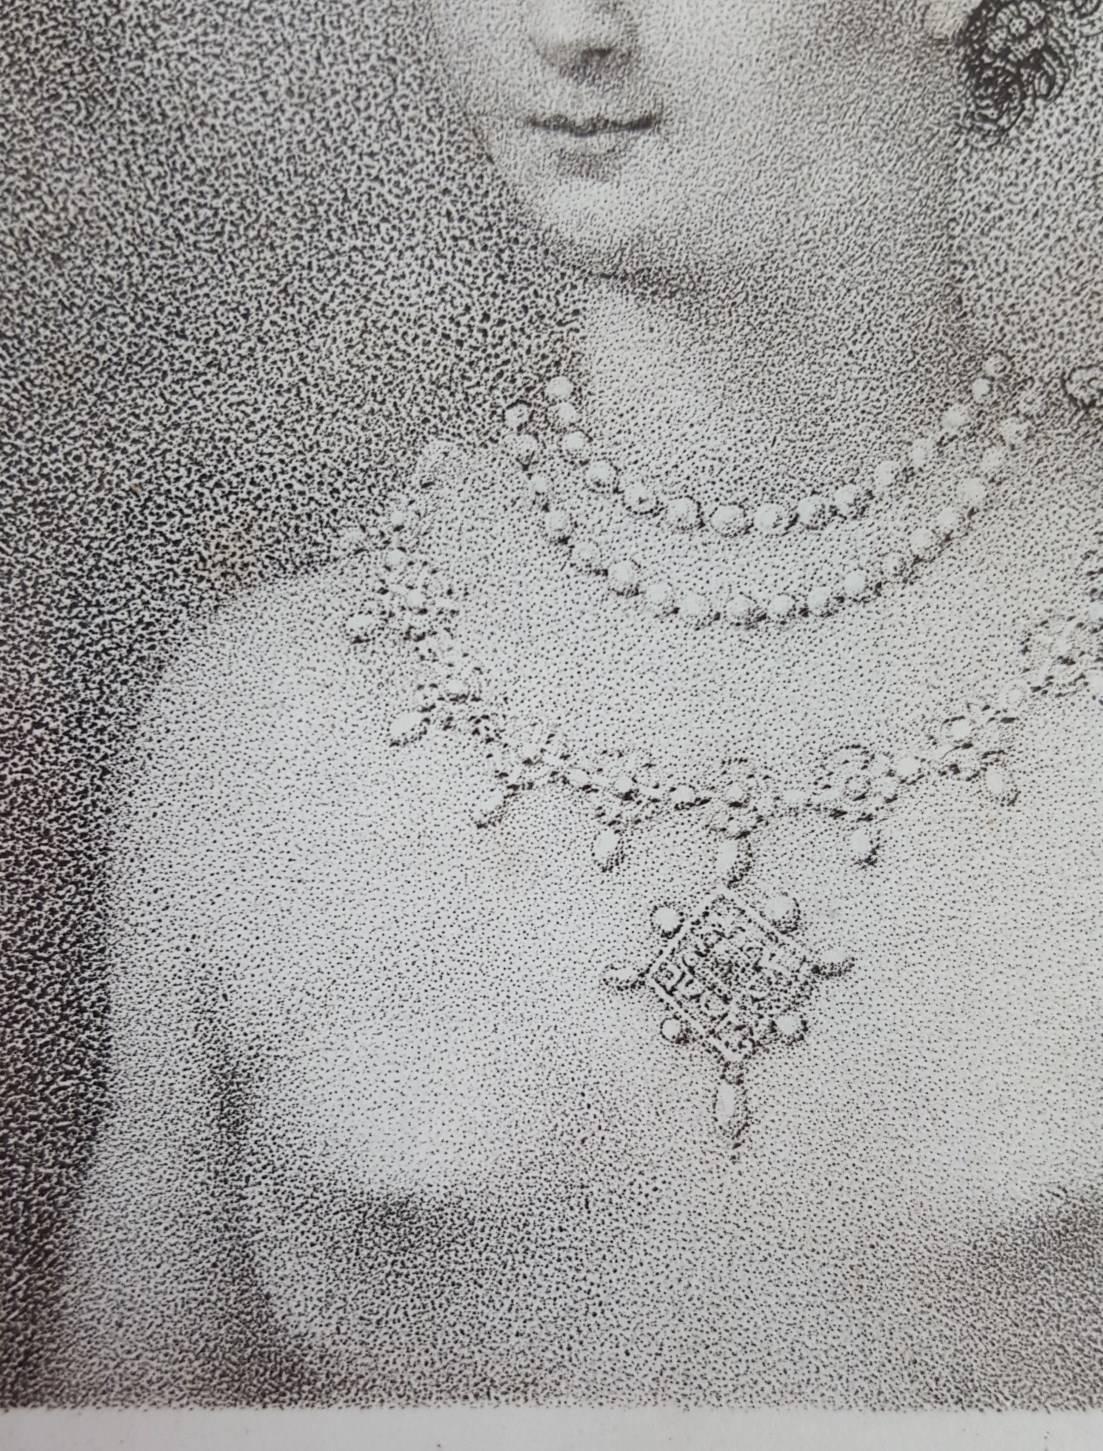 Jane Shore - Gray Portrait Print by Francesco Bartolozzi